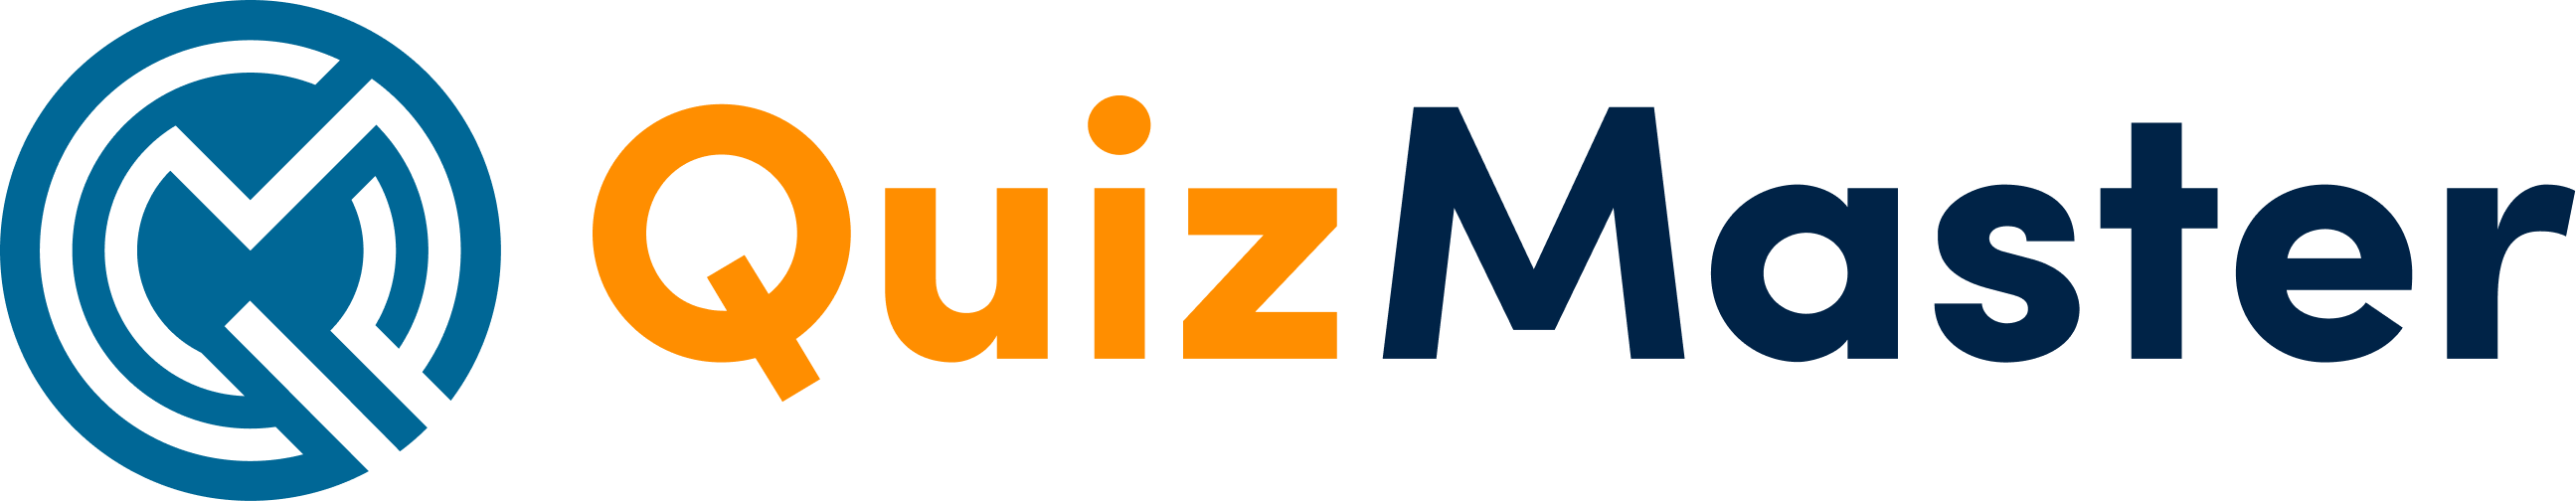 QuizMaster Logo